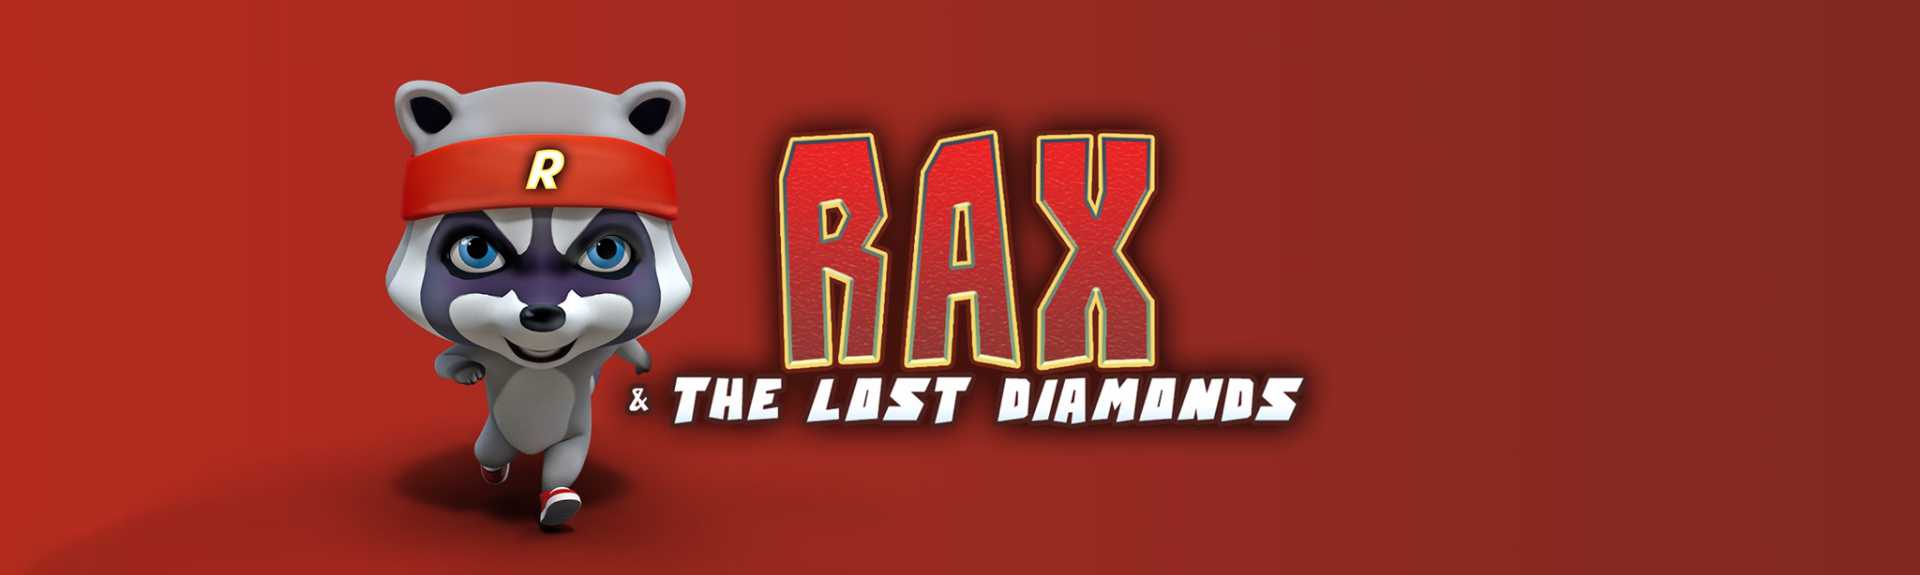 Rax & The Lost Diamonds